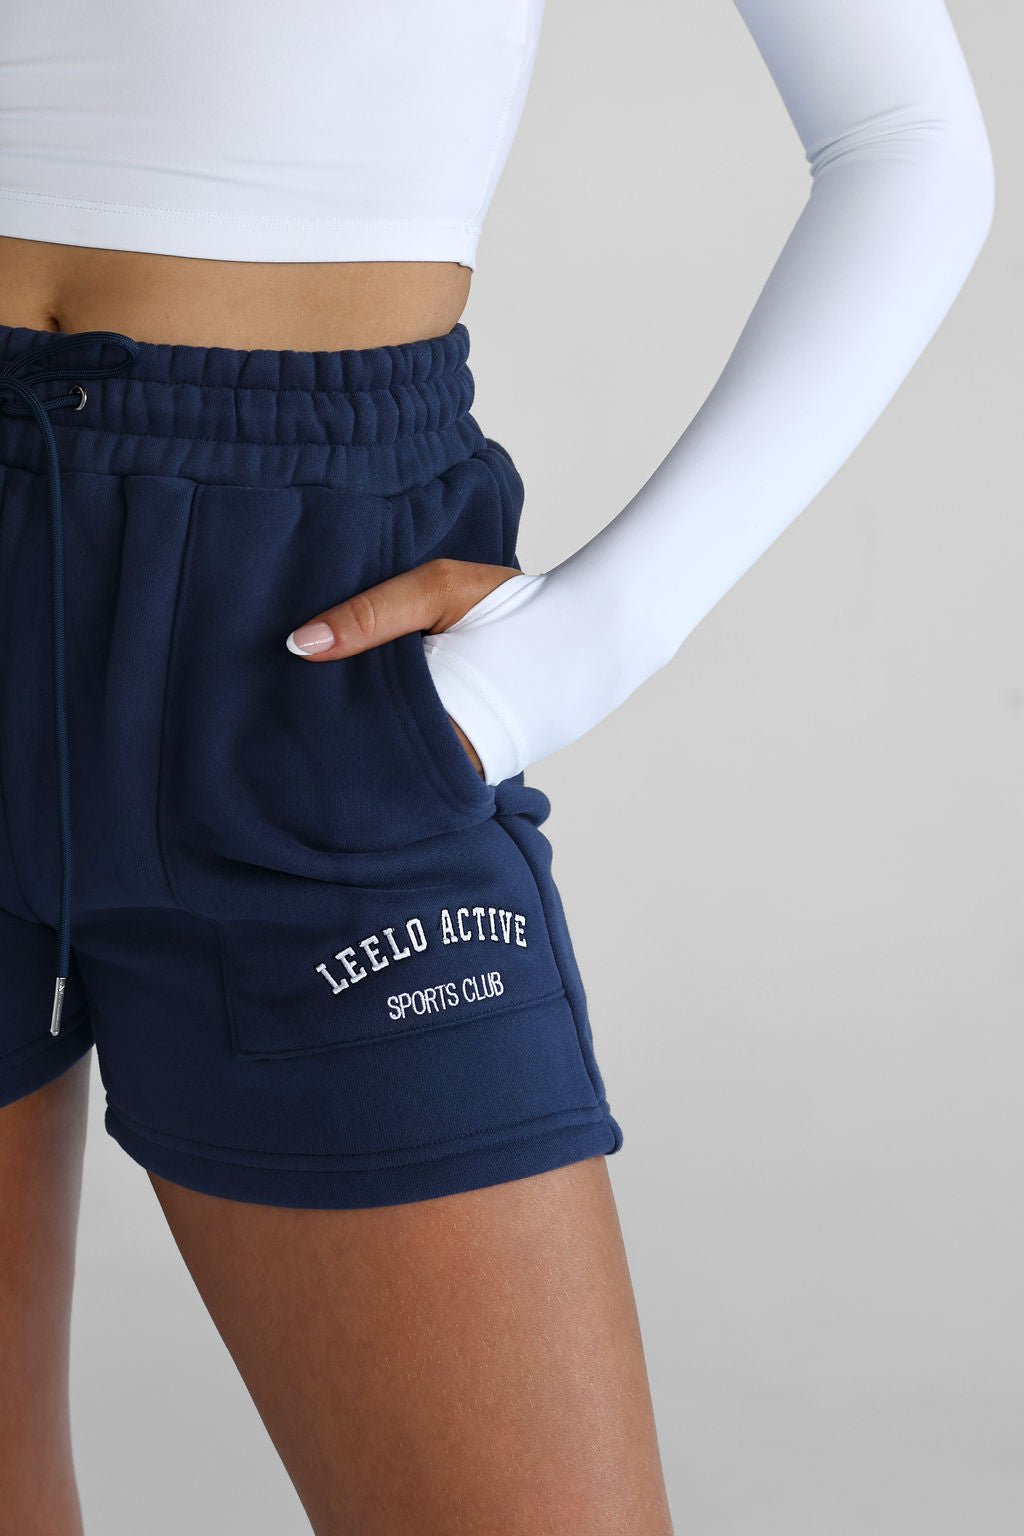 Sports Club Shorts - Navy - LEELO ACTIVE